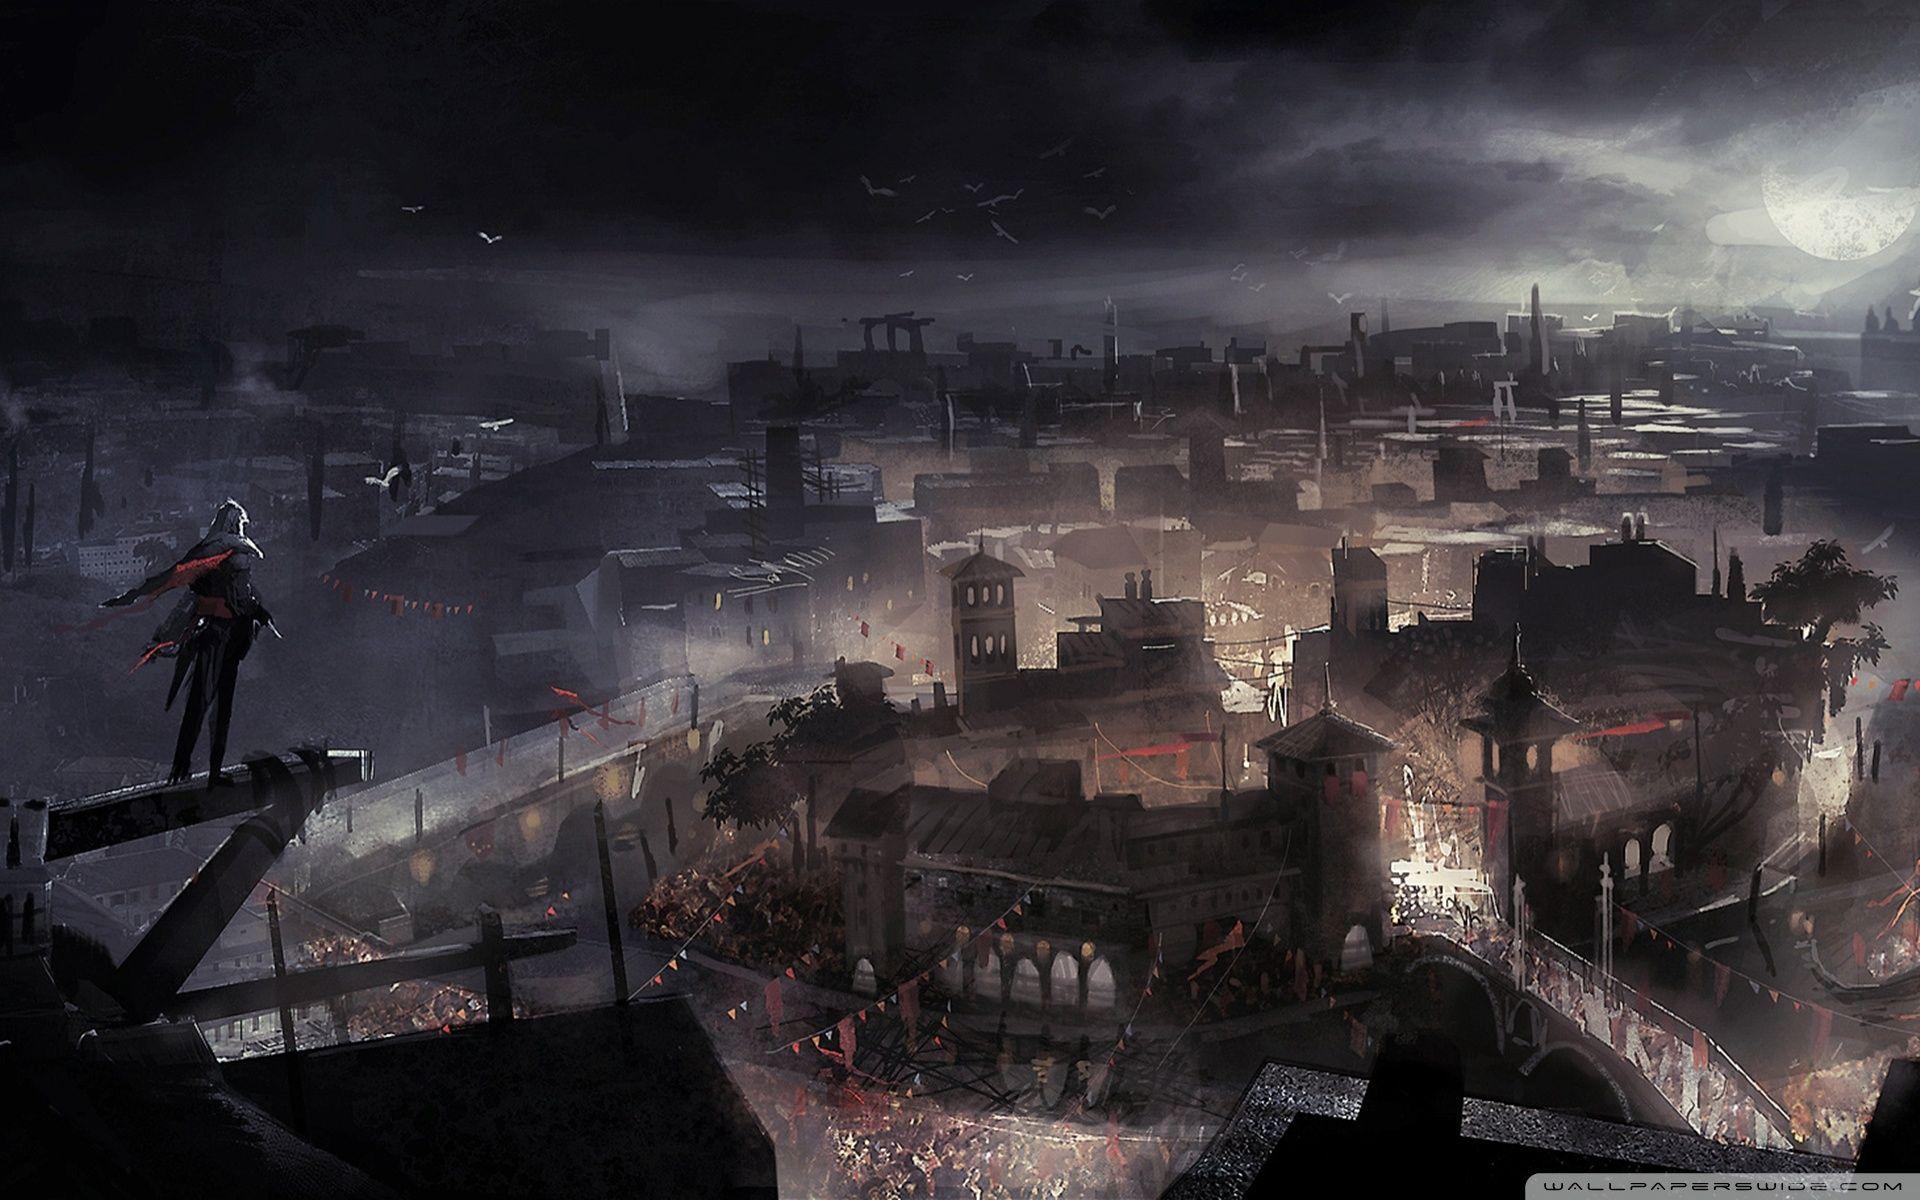 Assassin's Creed II Wallpaper